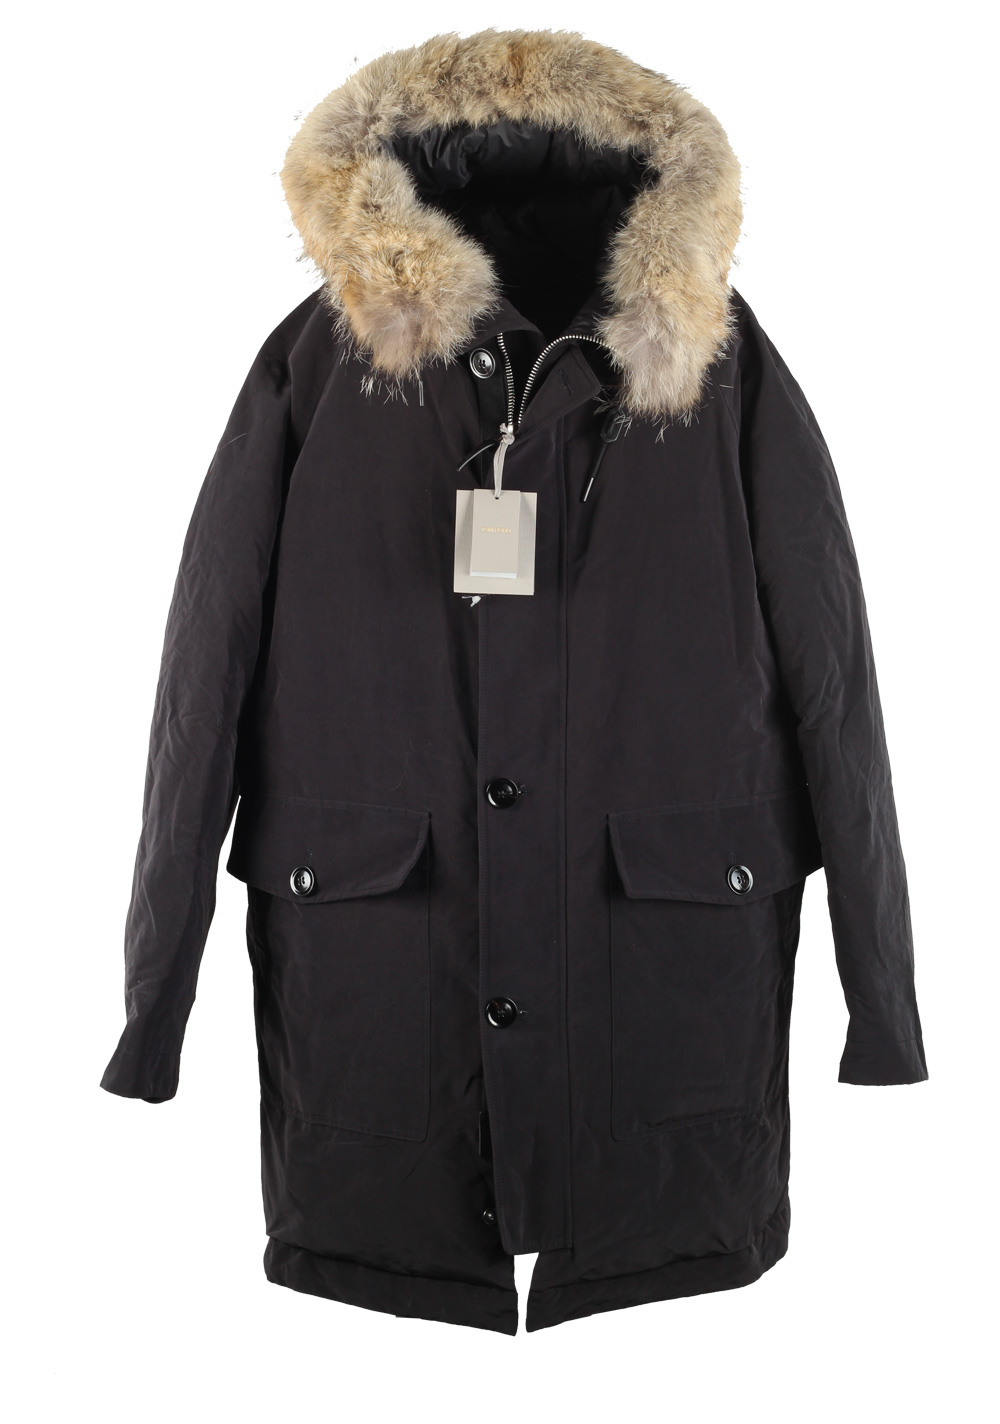 TOM FORD Black Mountain Parka Jacket Coat Size 54 / 44R U.S. Outerwear ...